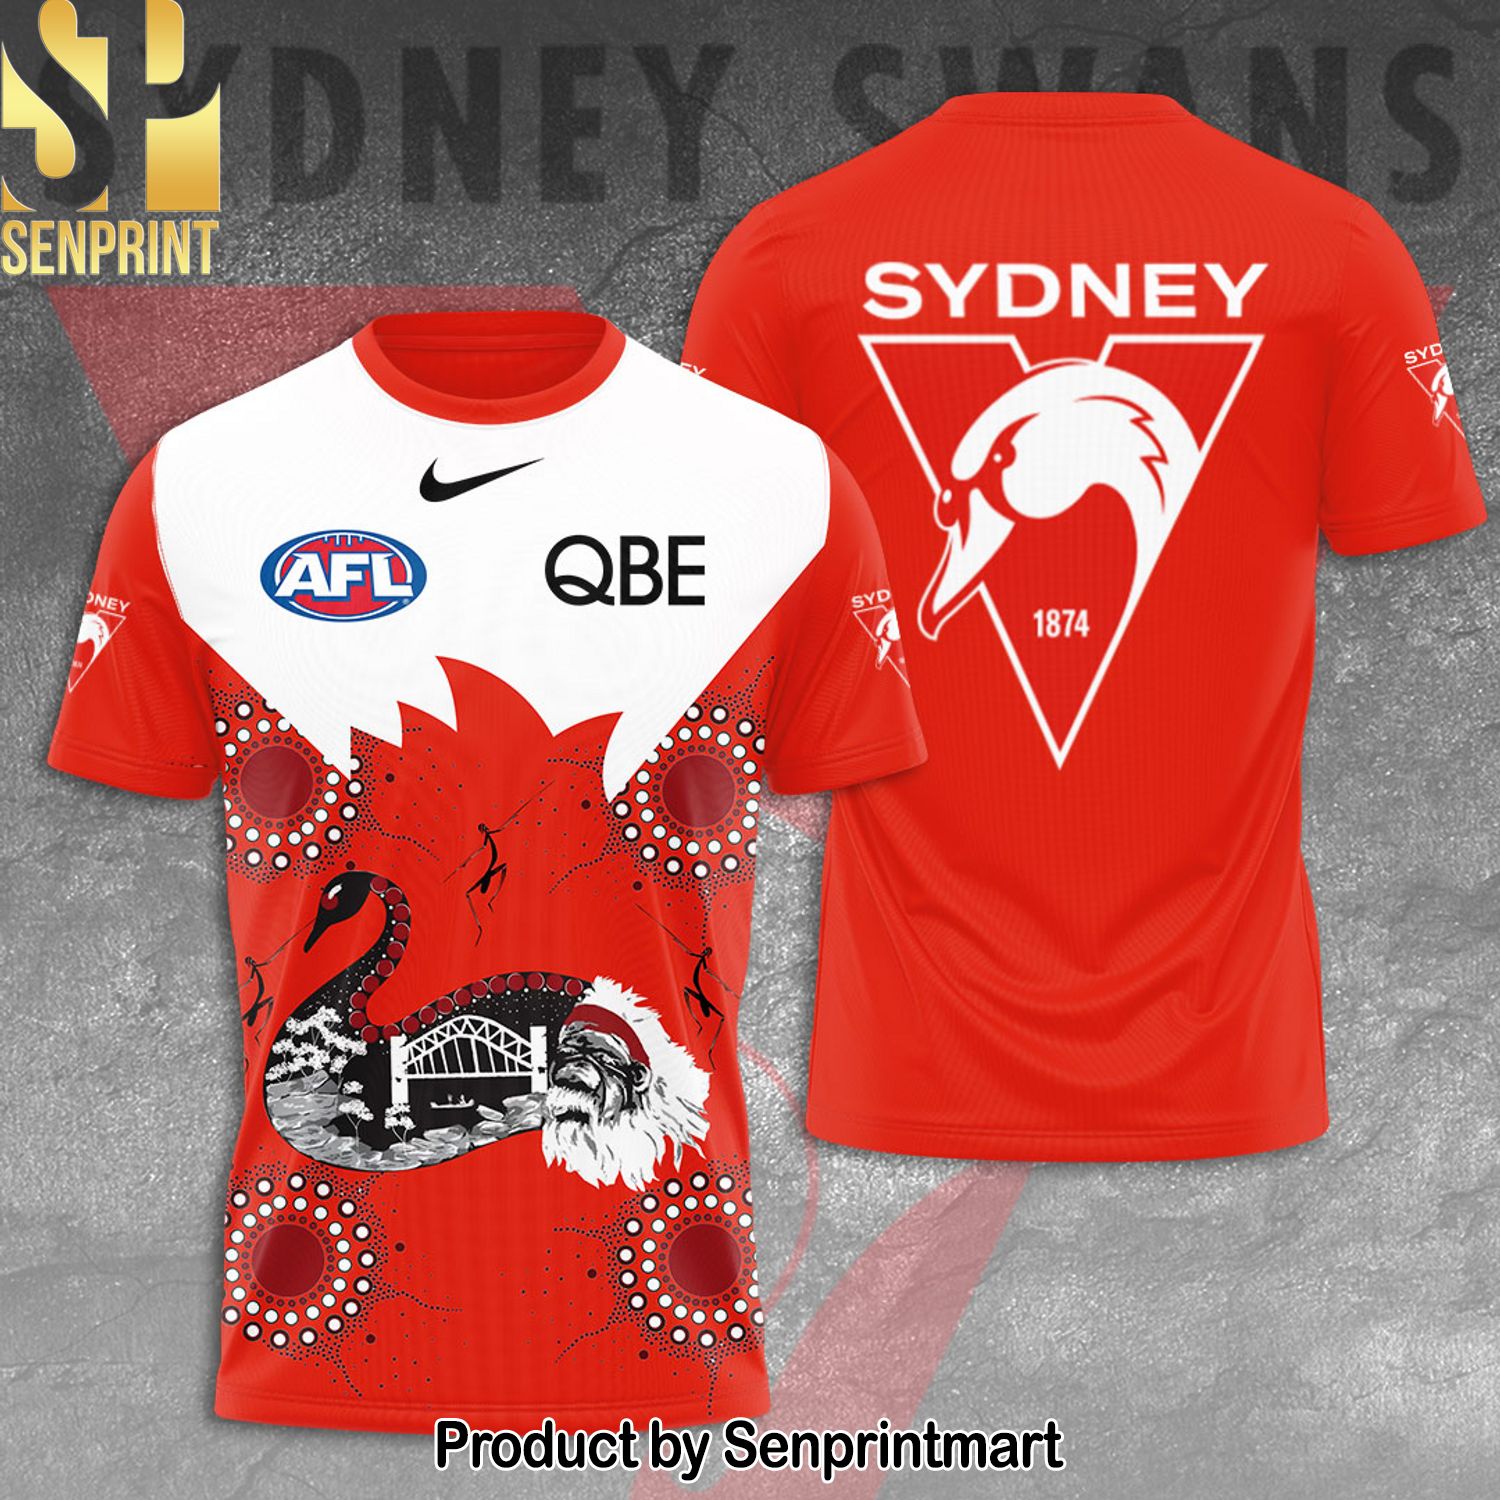 Sydney Swans Full Printing Shirt – SEN0202